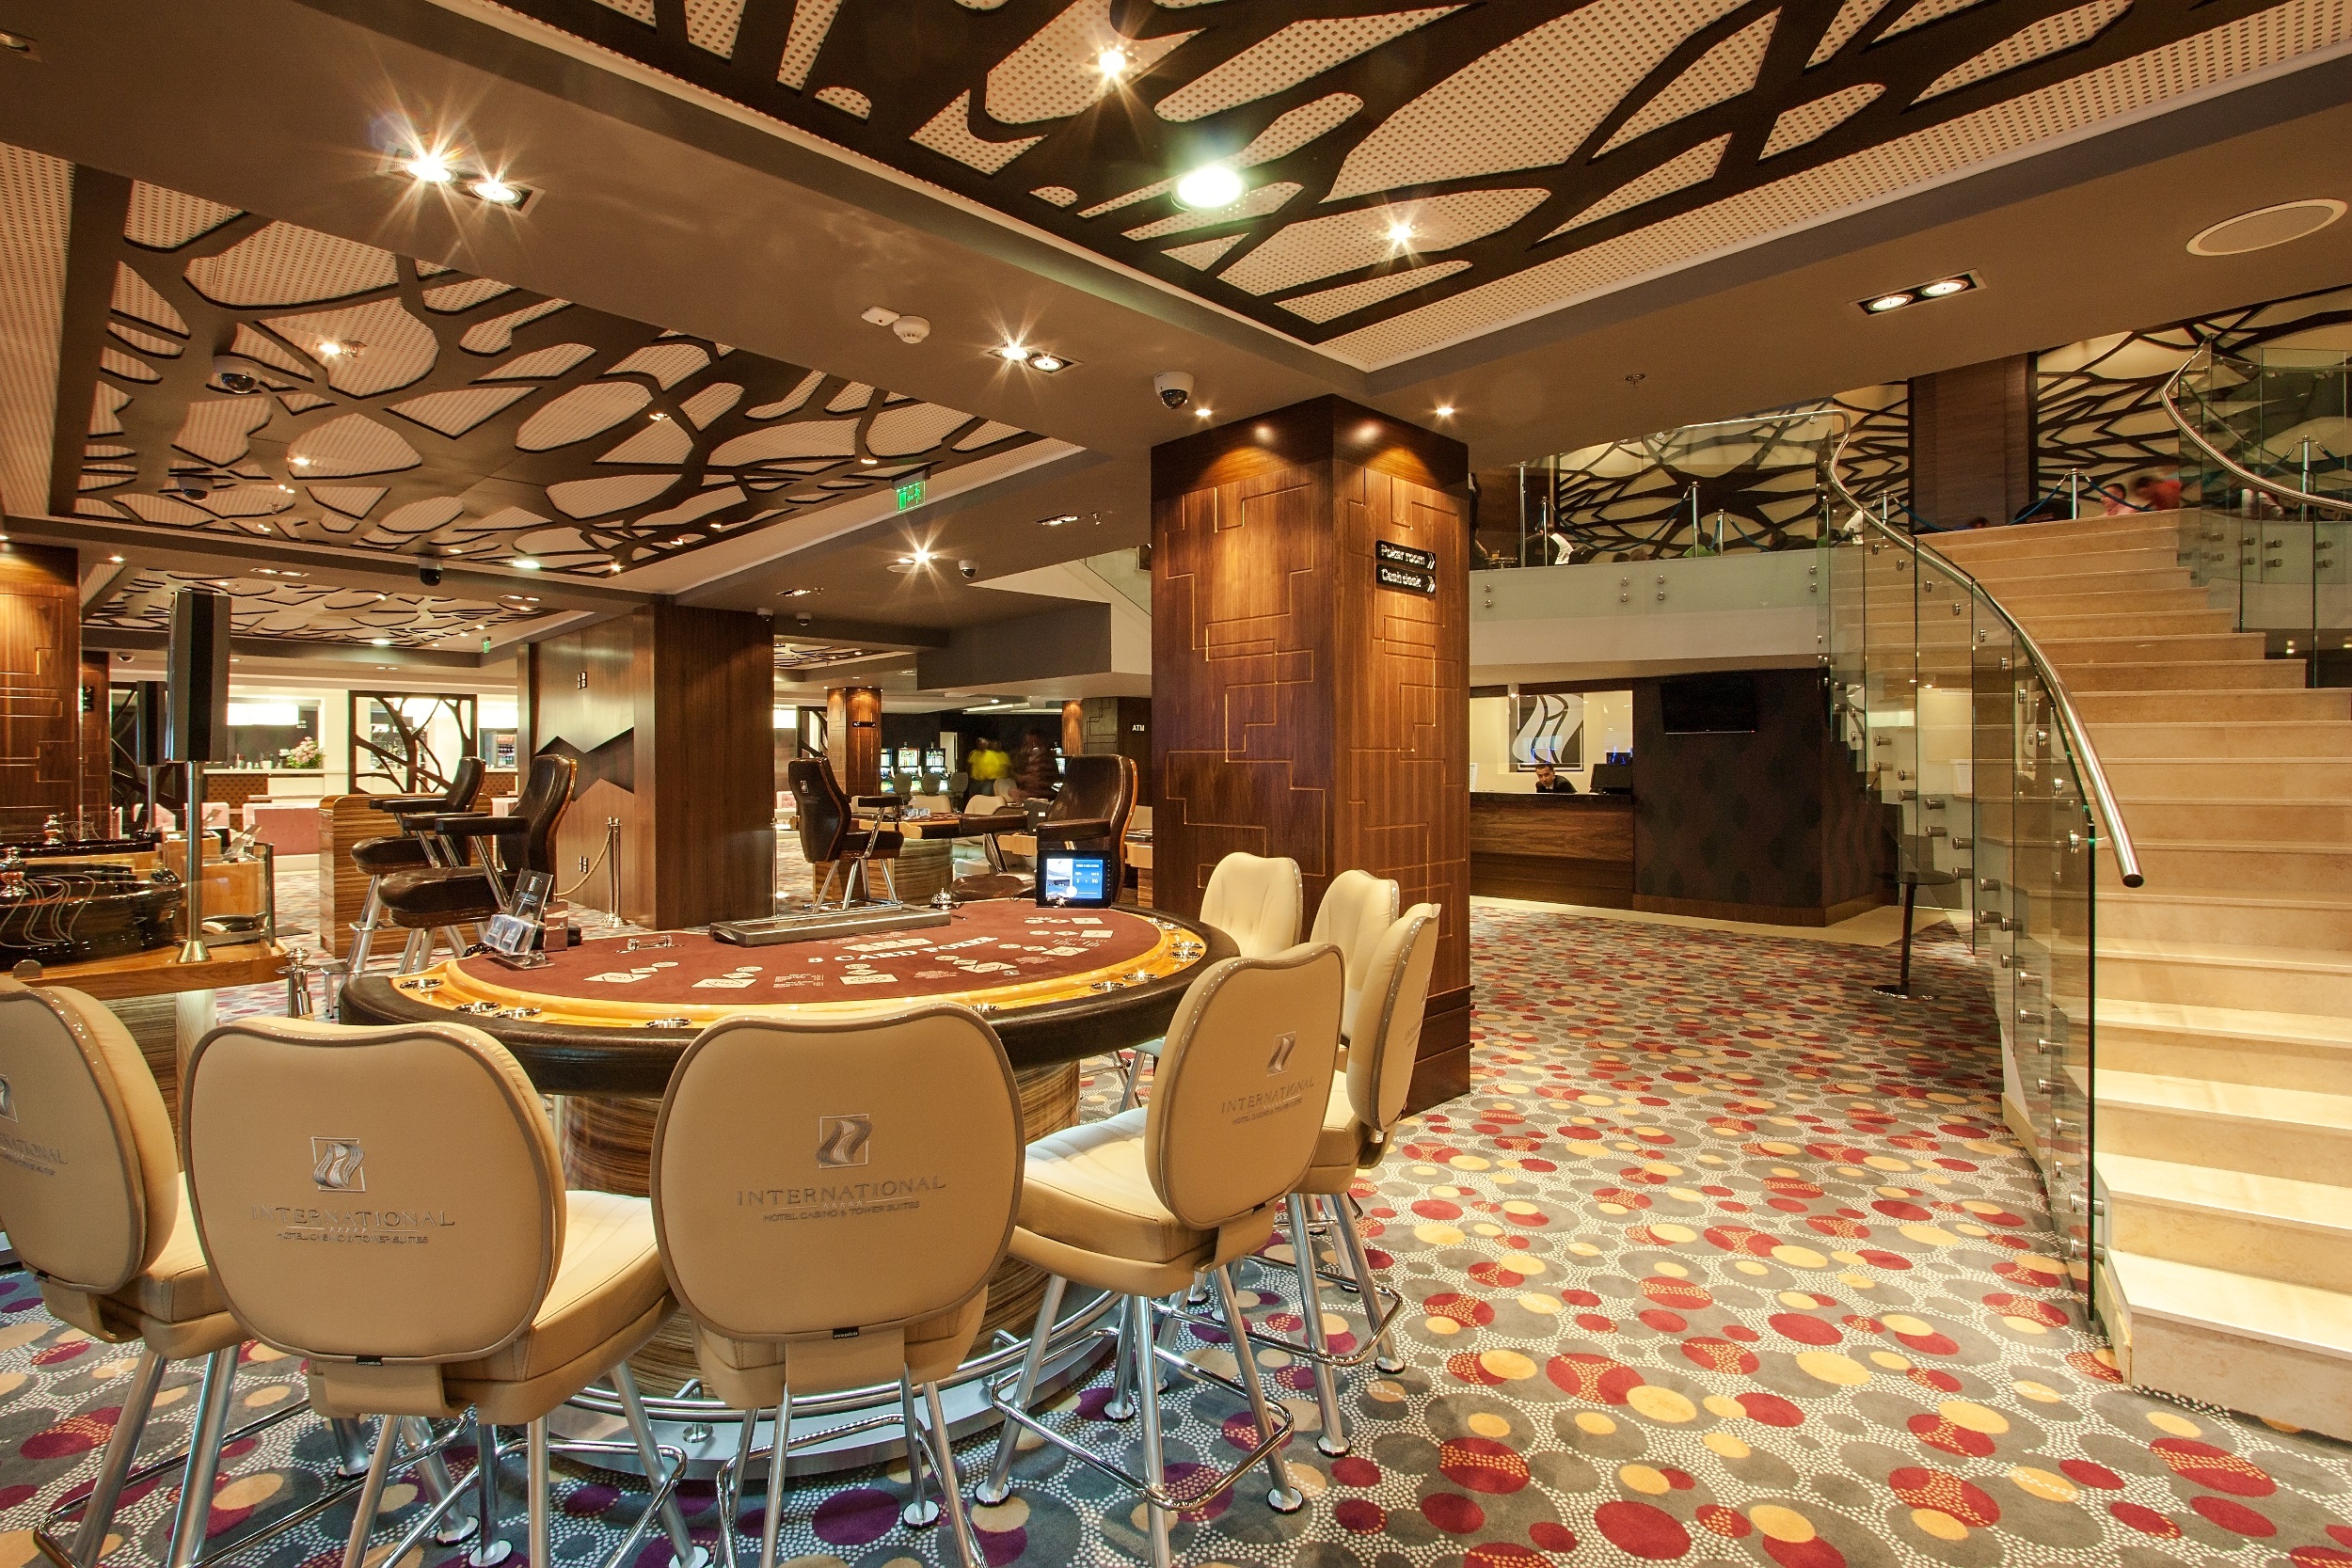 International Hotel Casino  Tower Suites